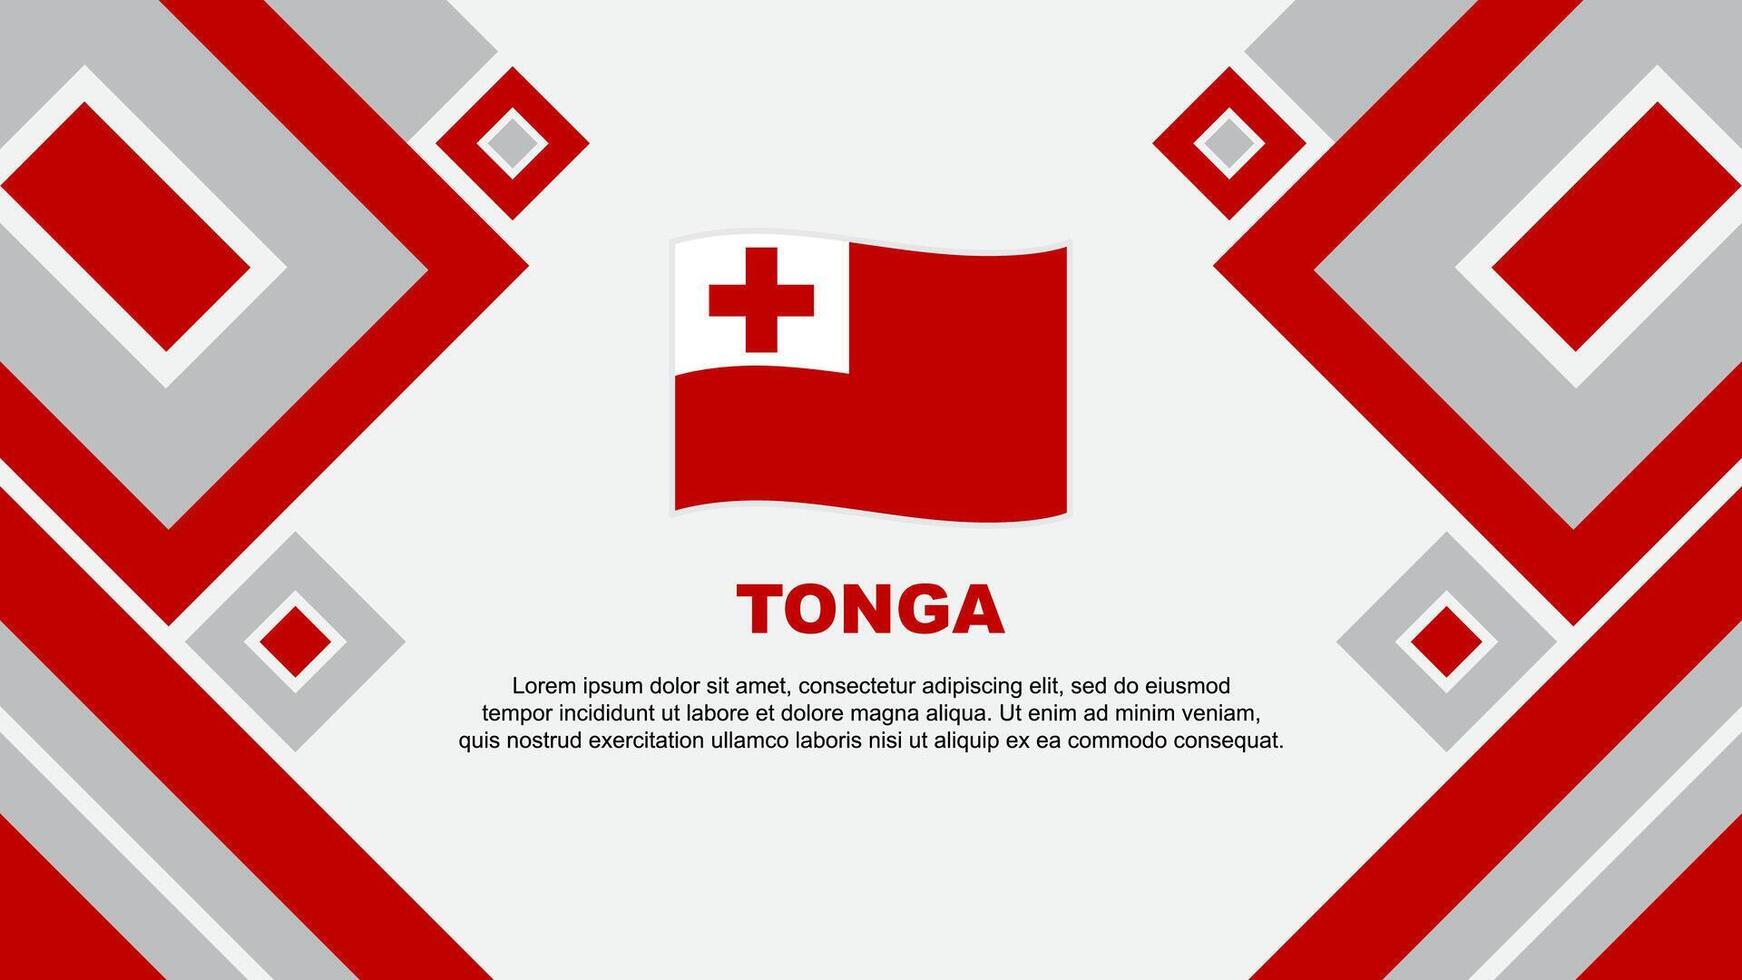 Tonga Flagge abstrakt Hintergrund Design Vorlage. Tonga Unabhängigkeit Tag Banner Hintergrund Vektor Illustration. Tonga Karikatur